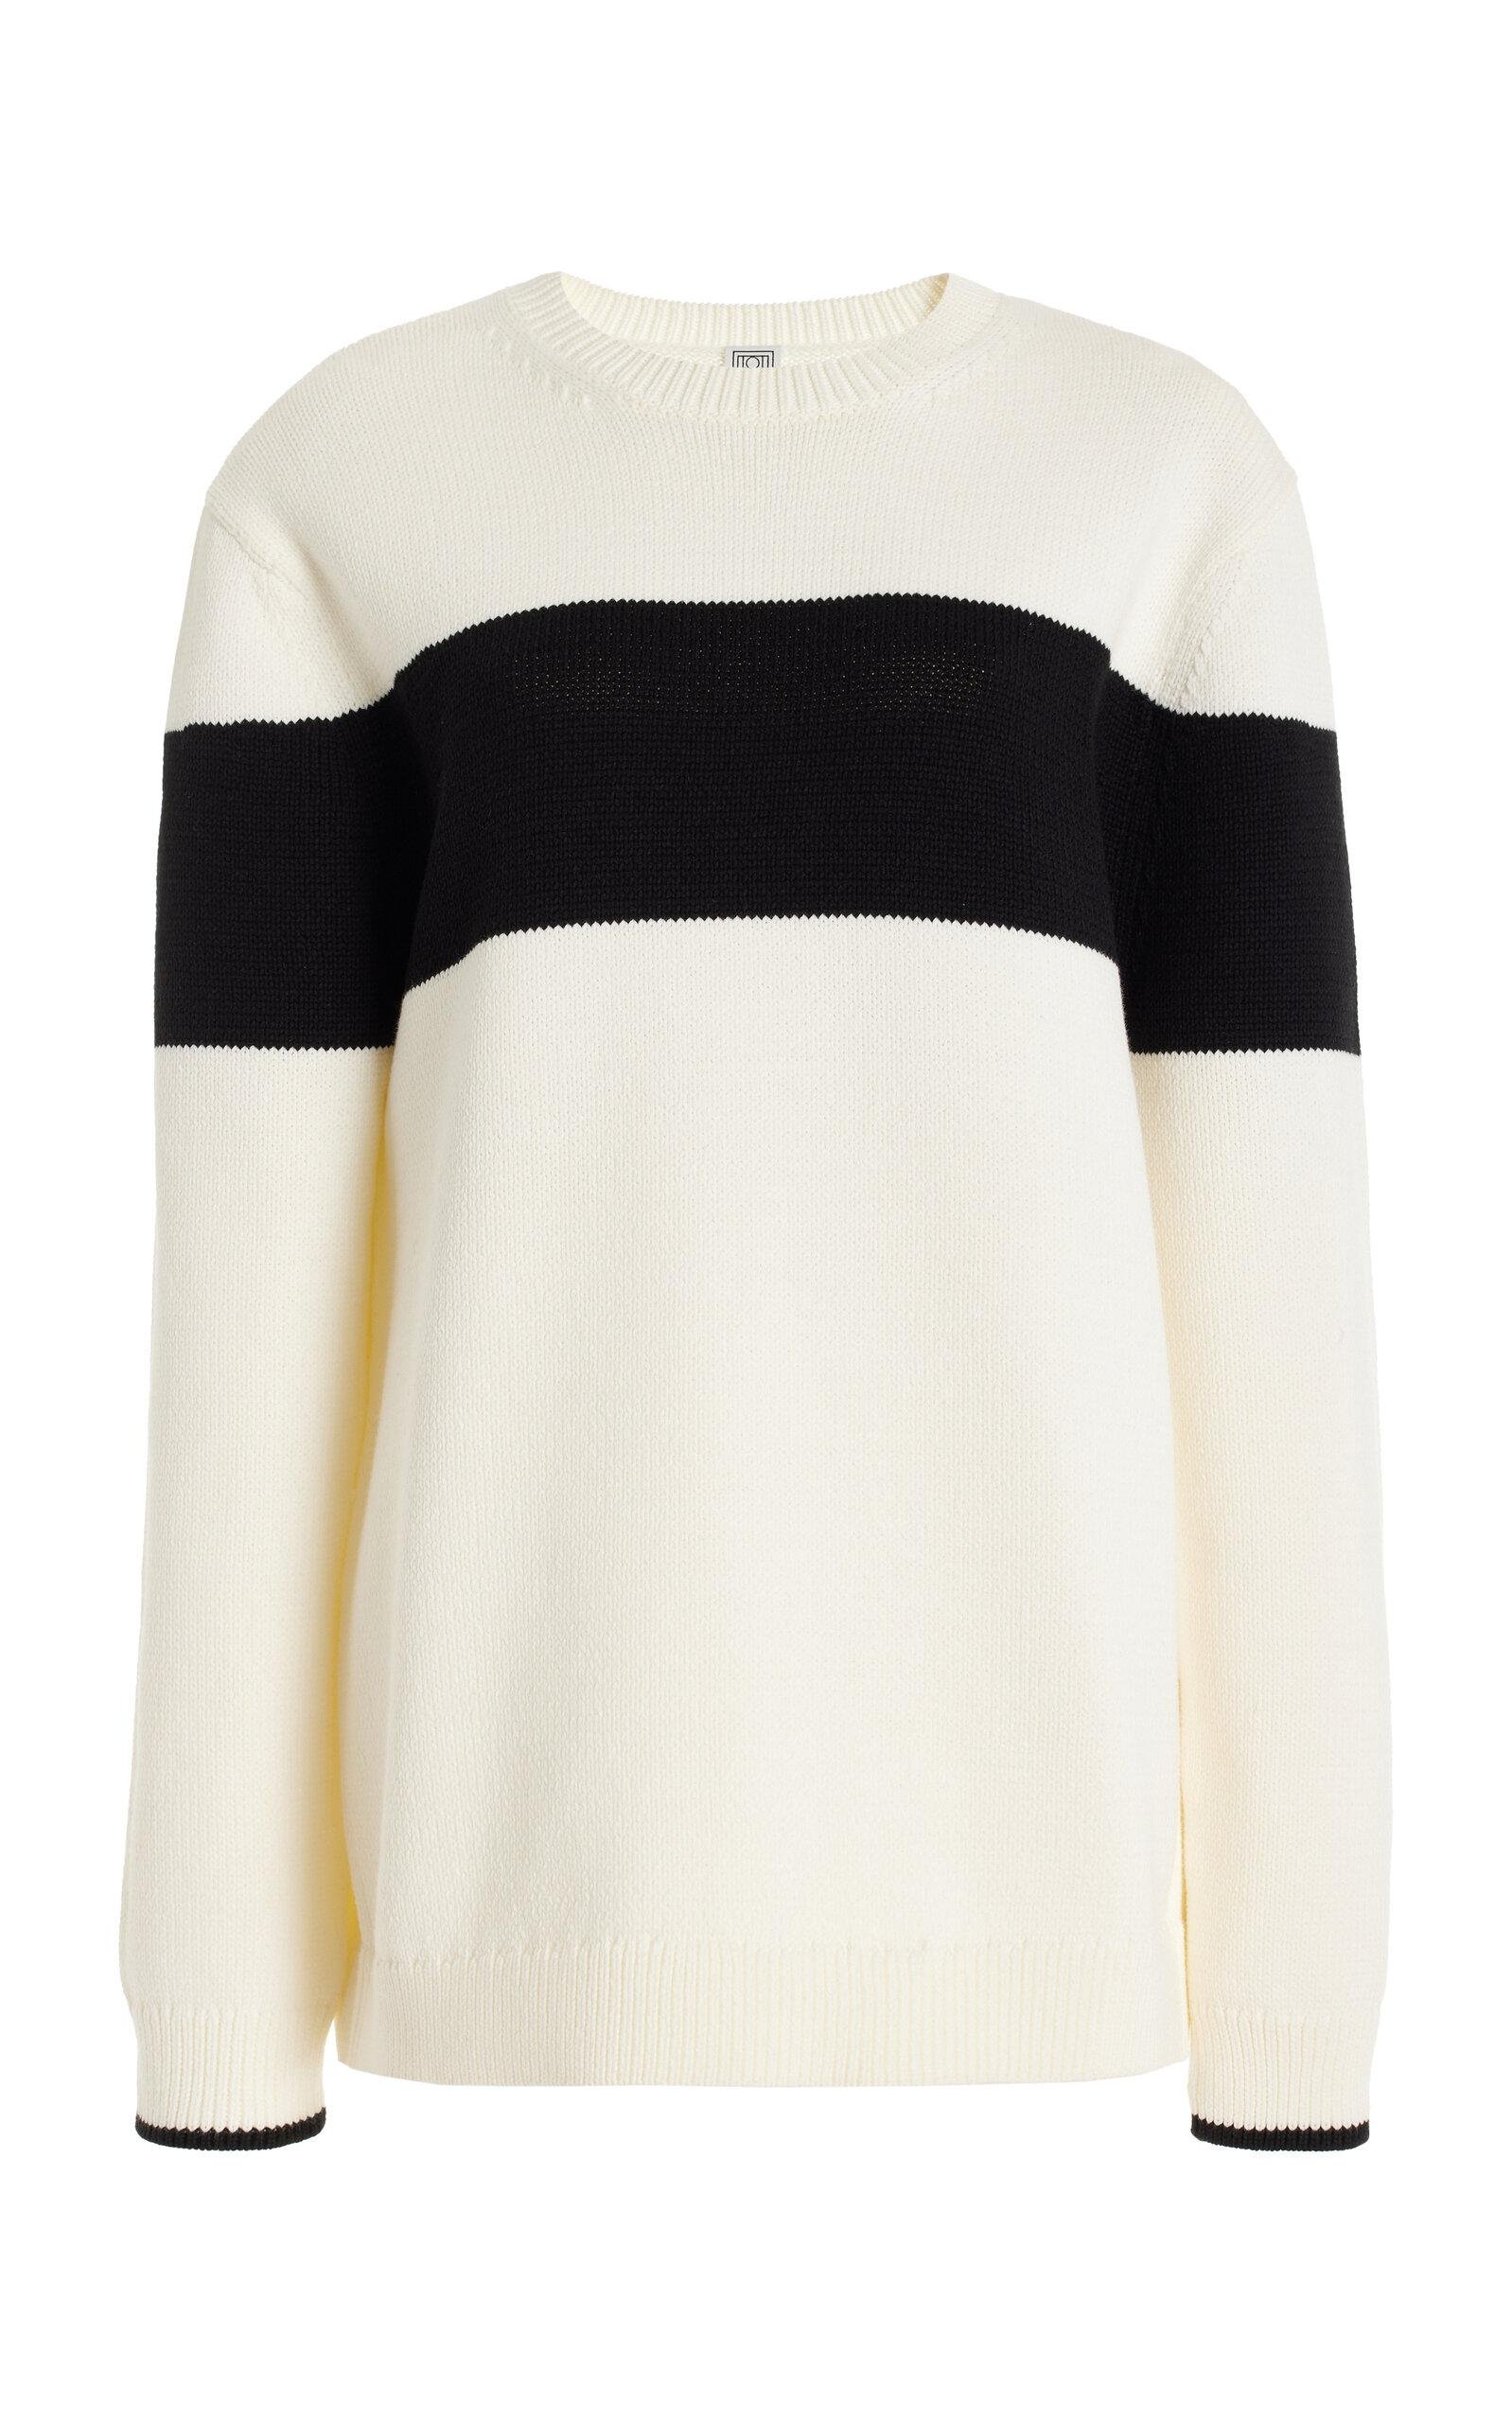 Toteme - Contrast-Striped Knit Sweater - Black/white - XS - Moda Operandi by TOTEME